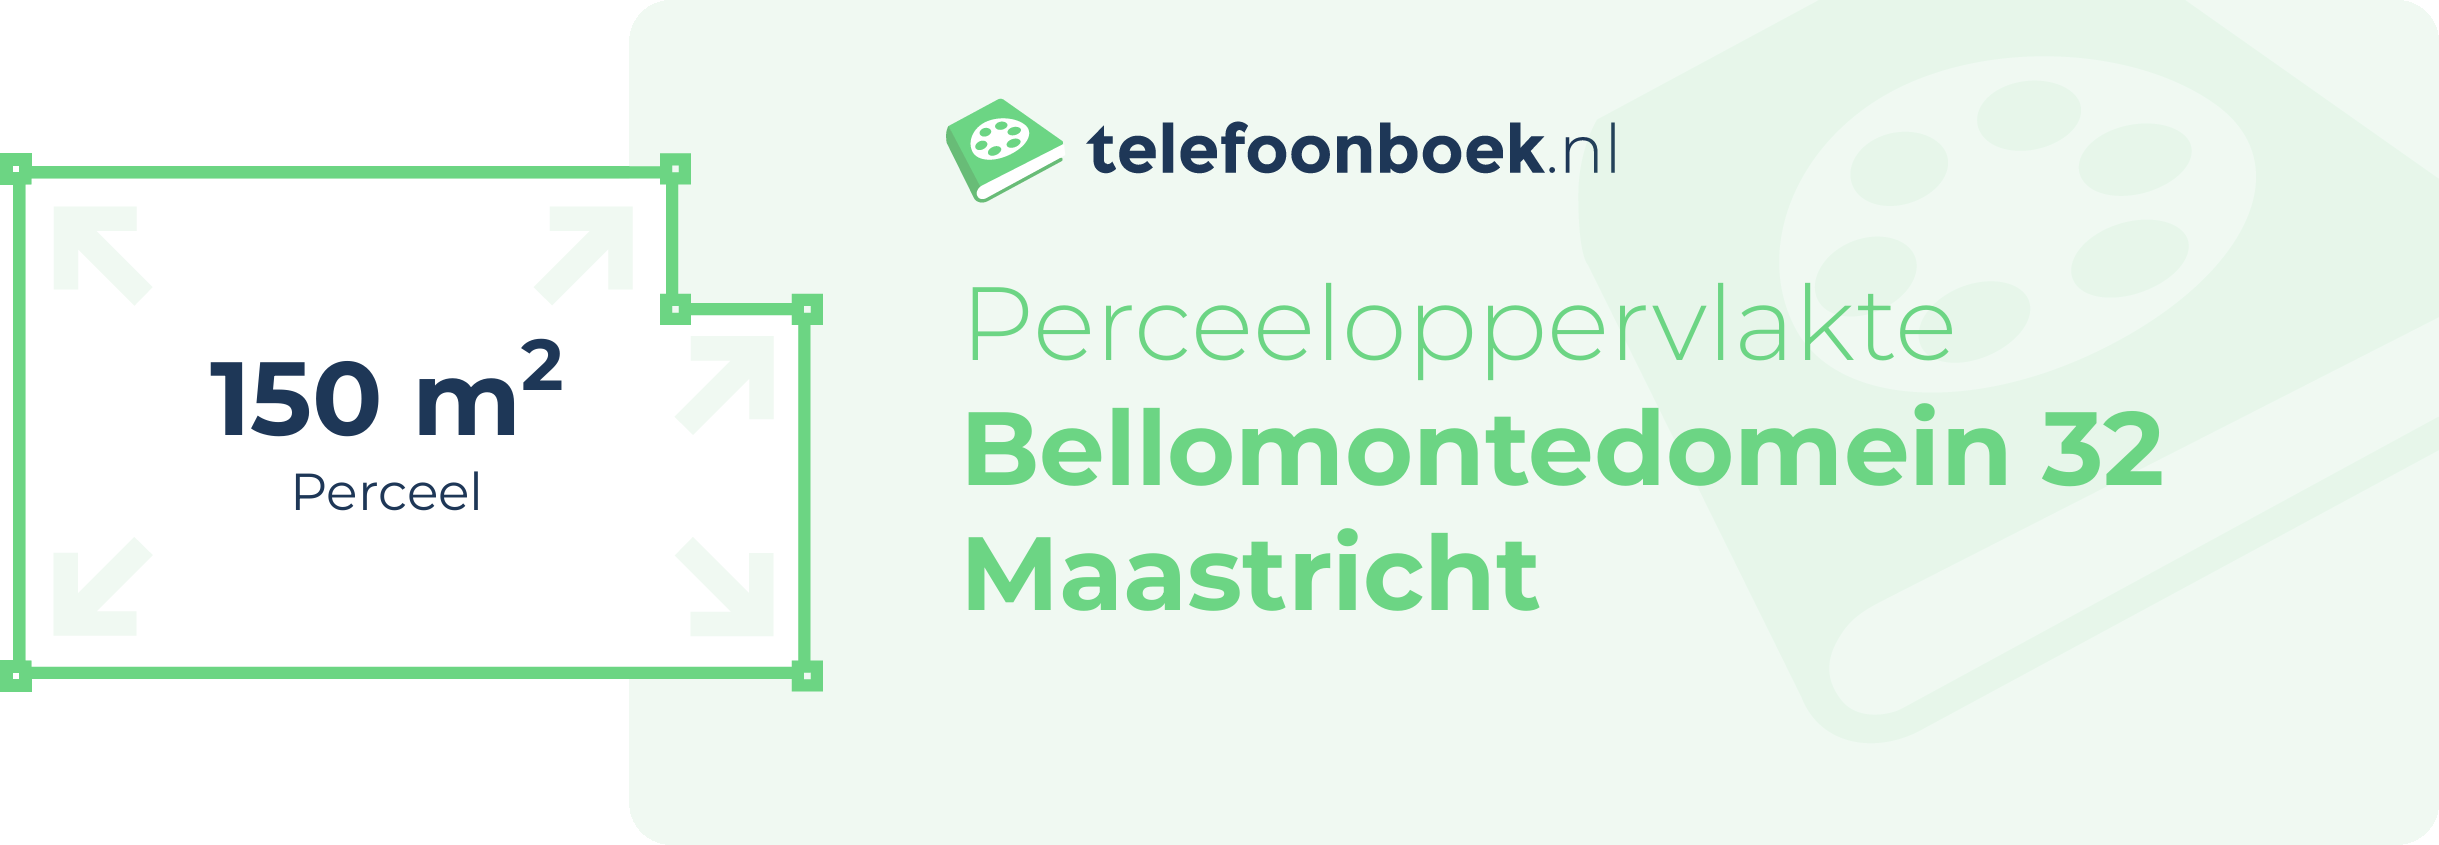 Perceeloppervlakte Bellomontedomein 32 Maastricht